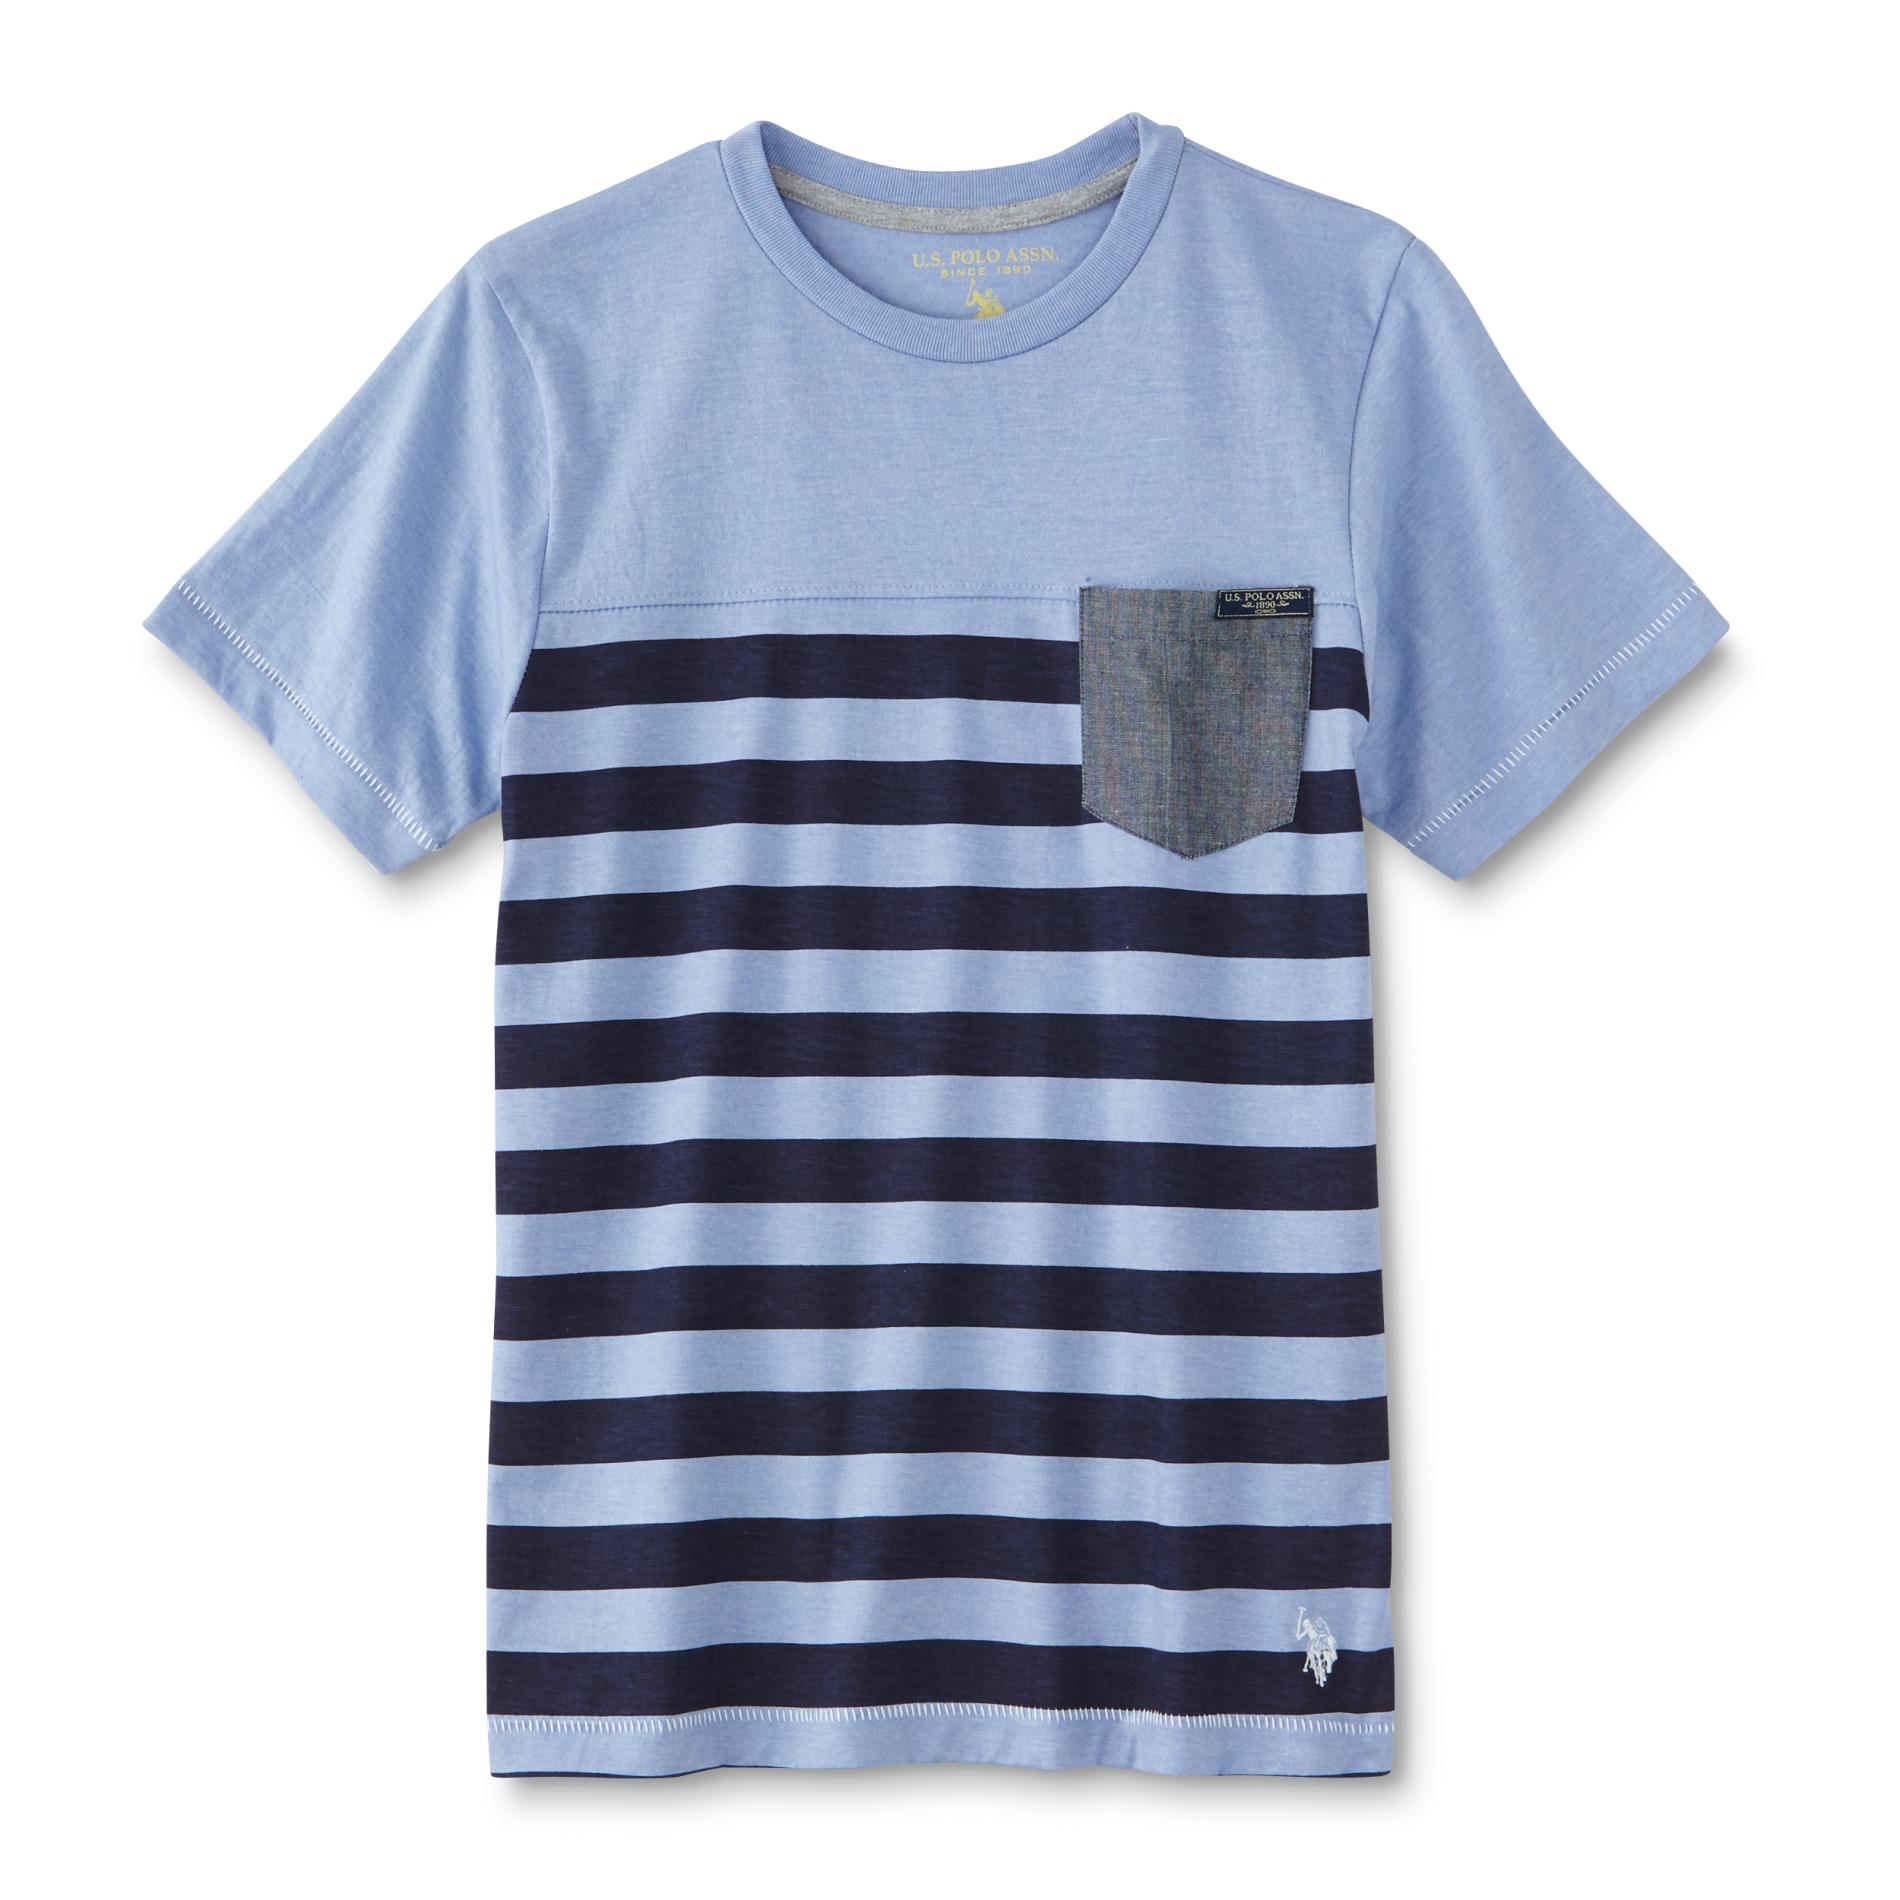 U.S. Polo Assn. Boy's Pocket T-Shirt - Striped